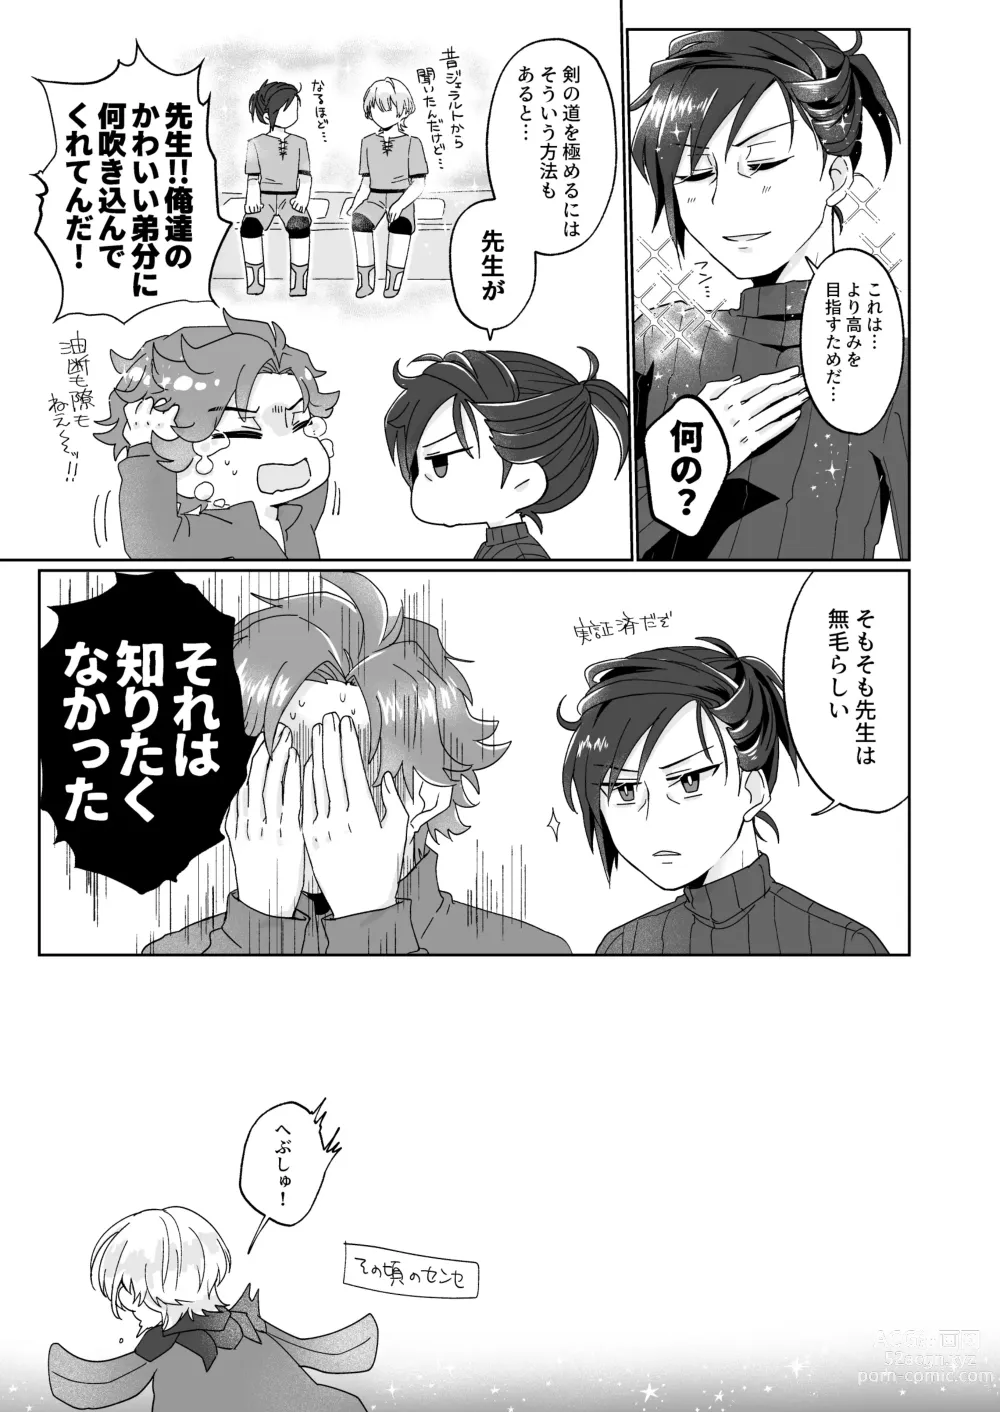 Page 7 of doujinshi Shaving Panic!